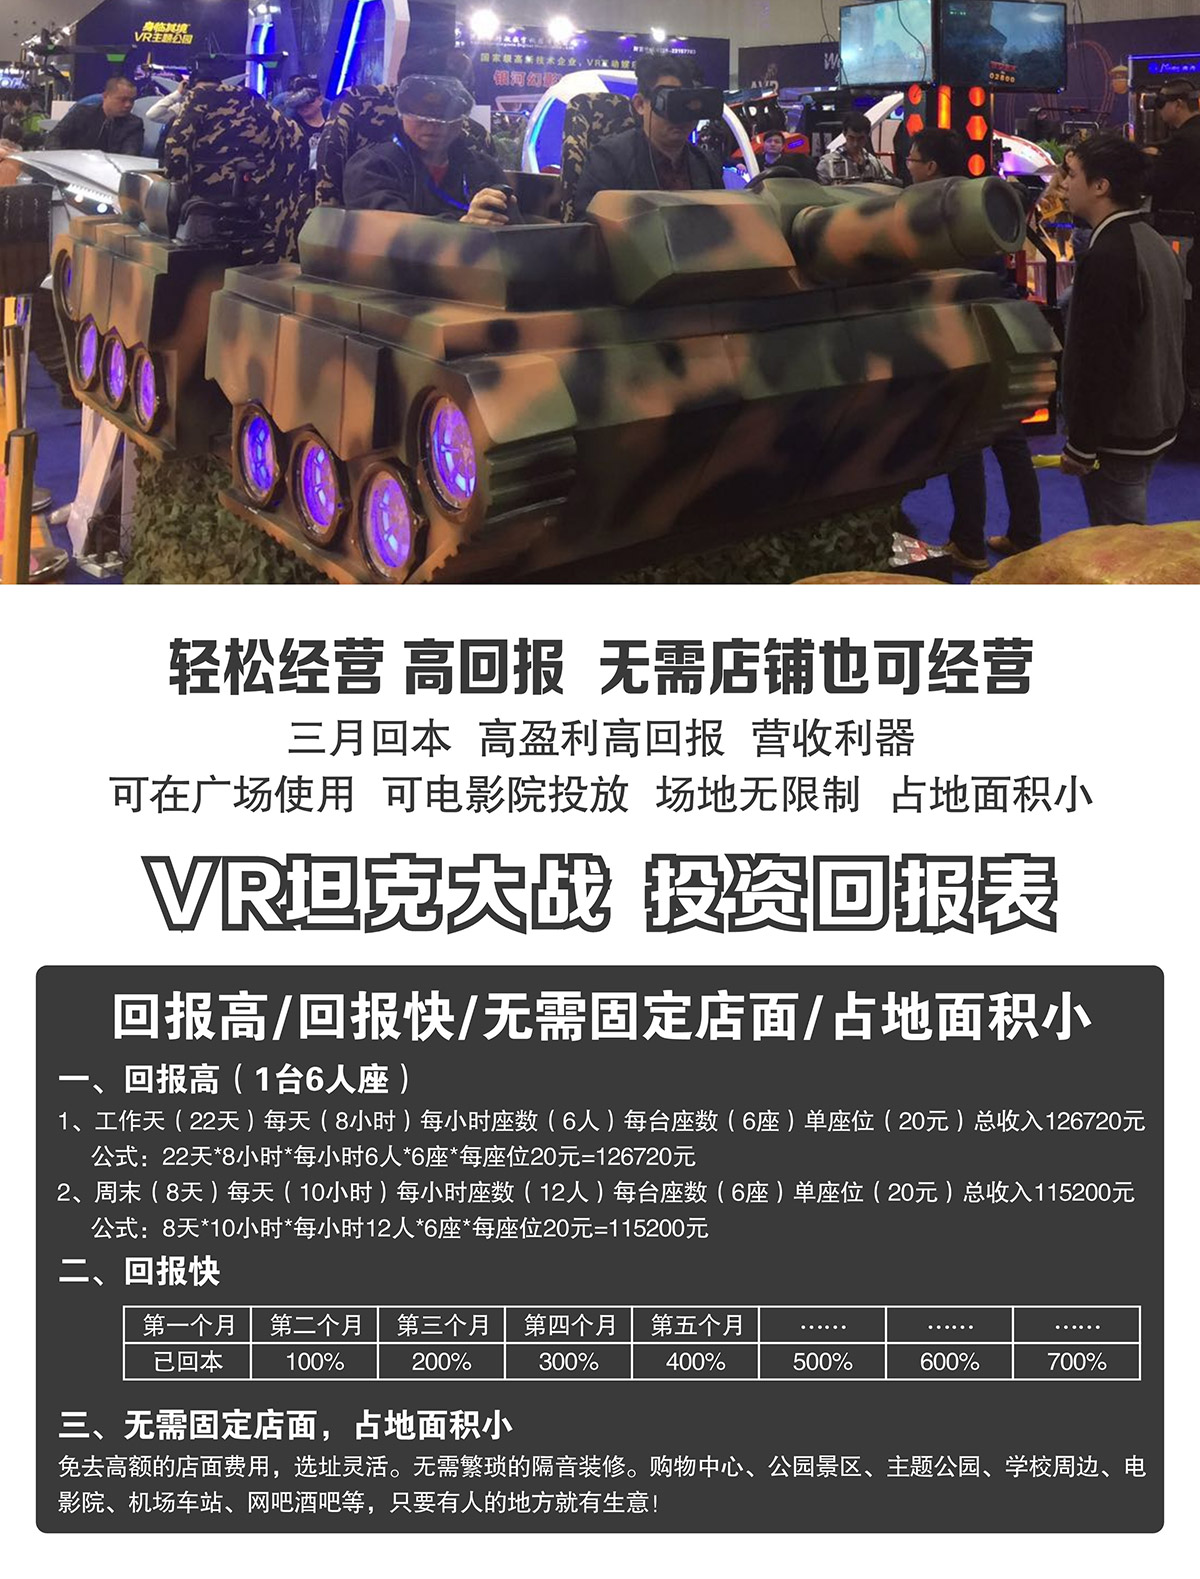 04-VR坦克大战投资回报表.jpg